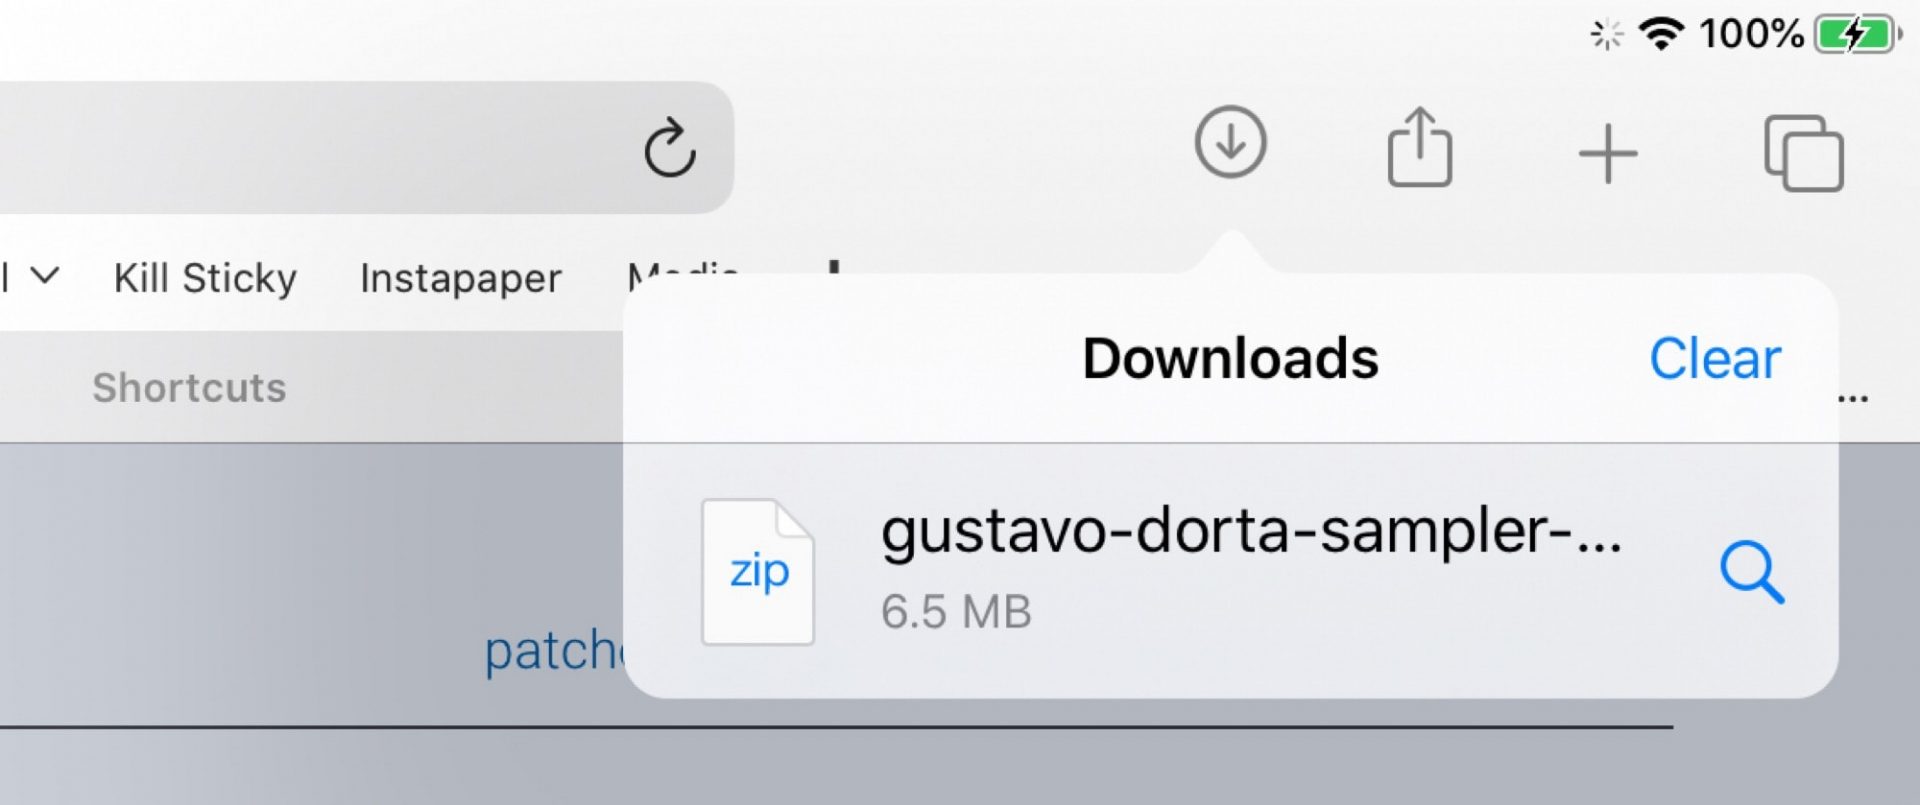 download button safari ipad